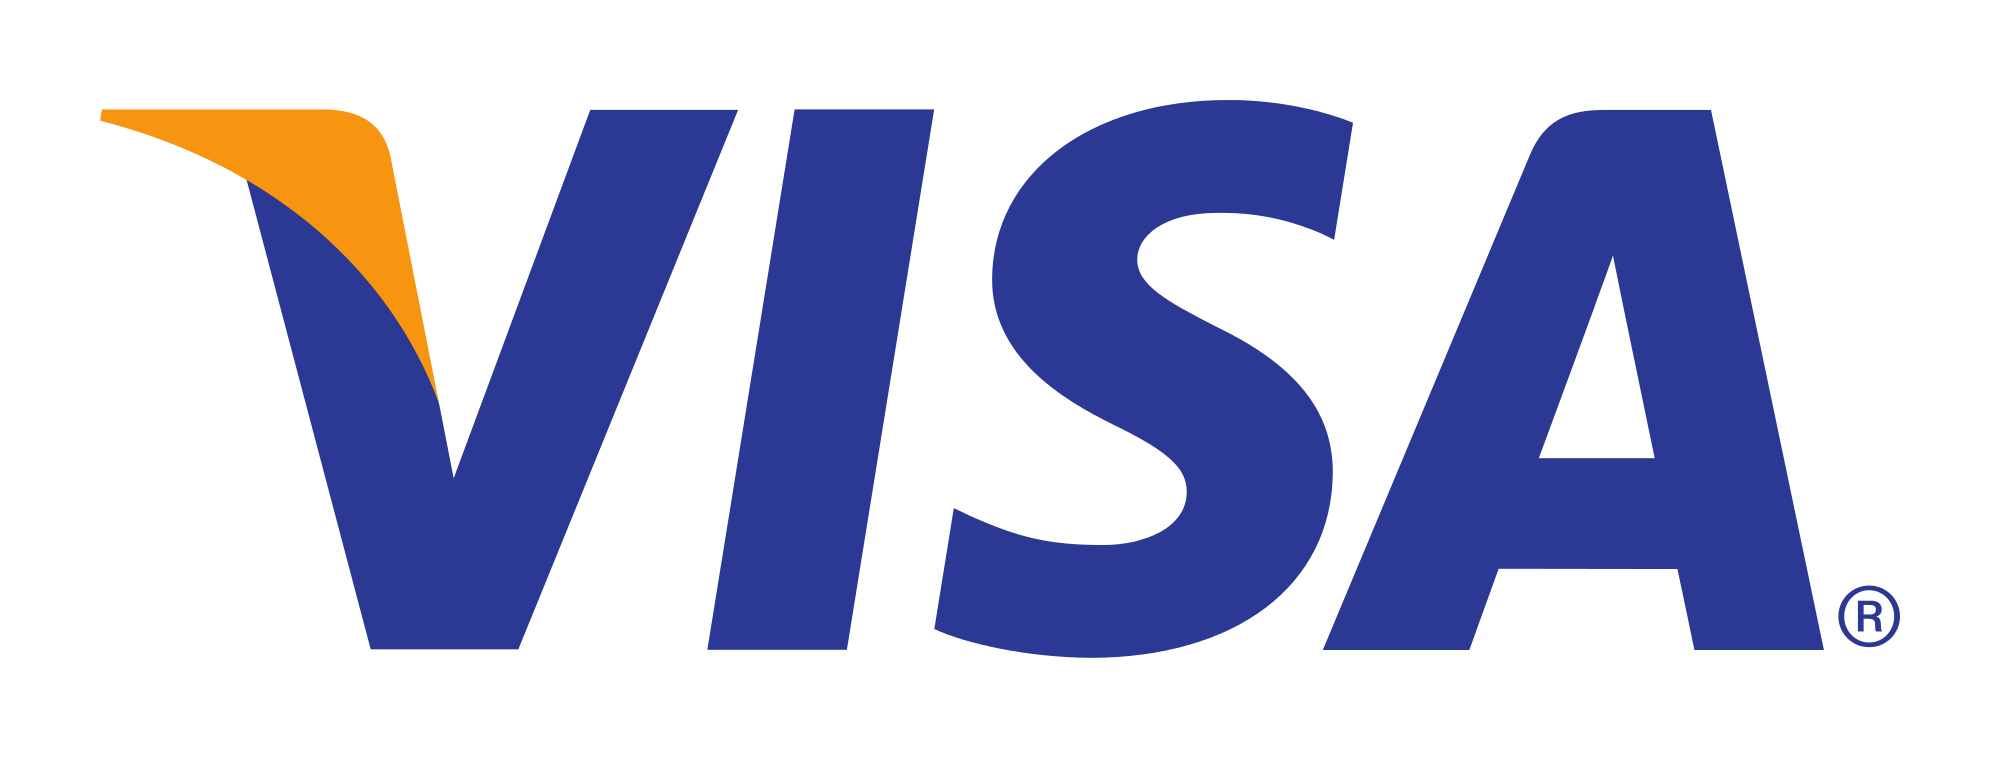 Visa Inc.